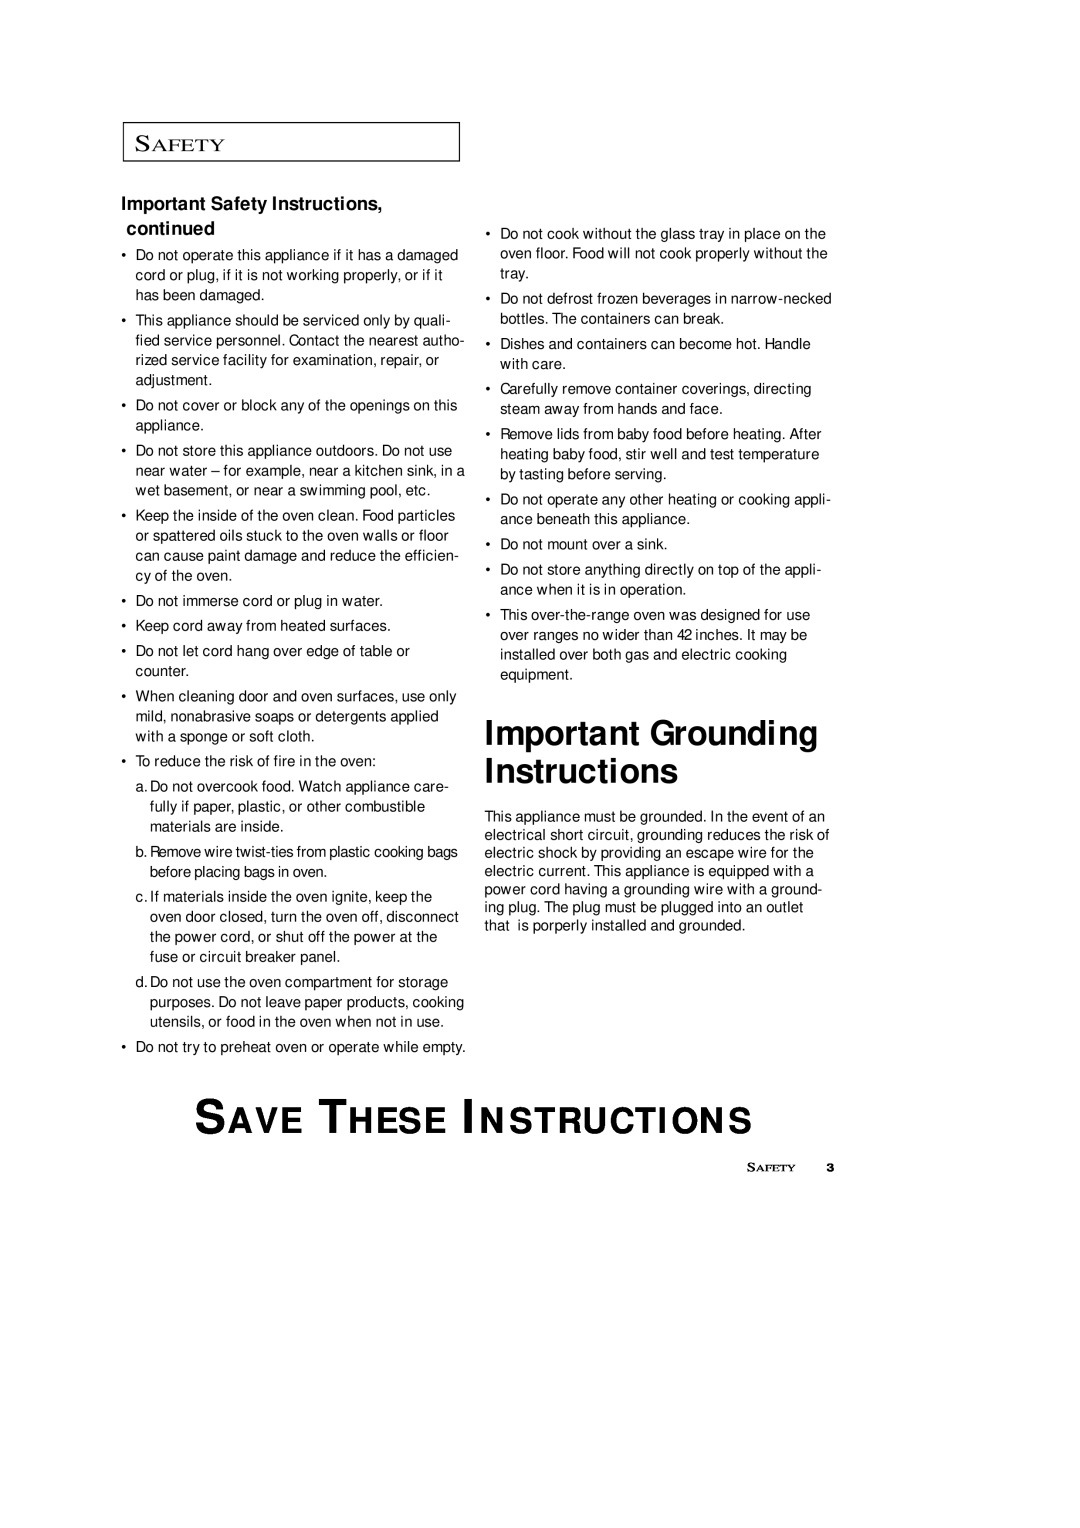 Samsung SRH1230ZG Important Grounding Instructions, Important Safety Instructions, continued, Save These Instructions 